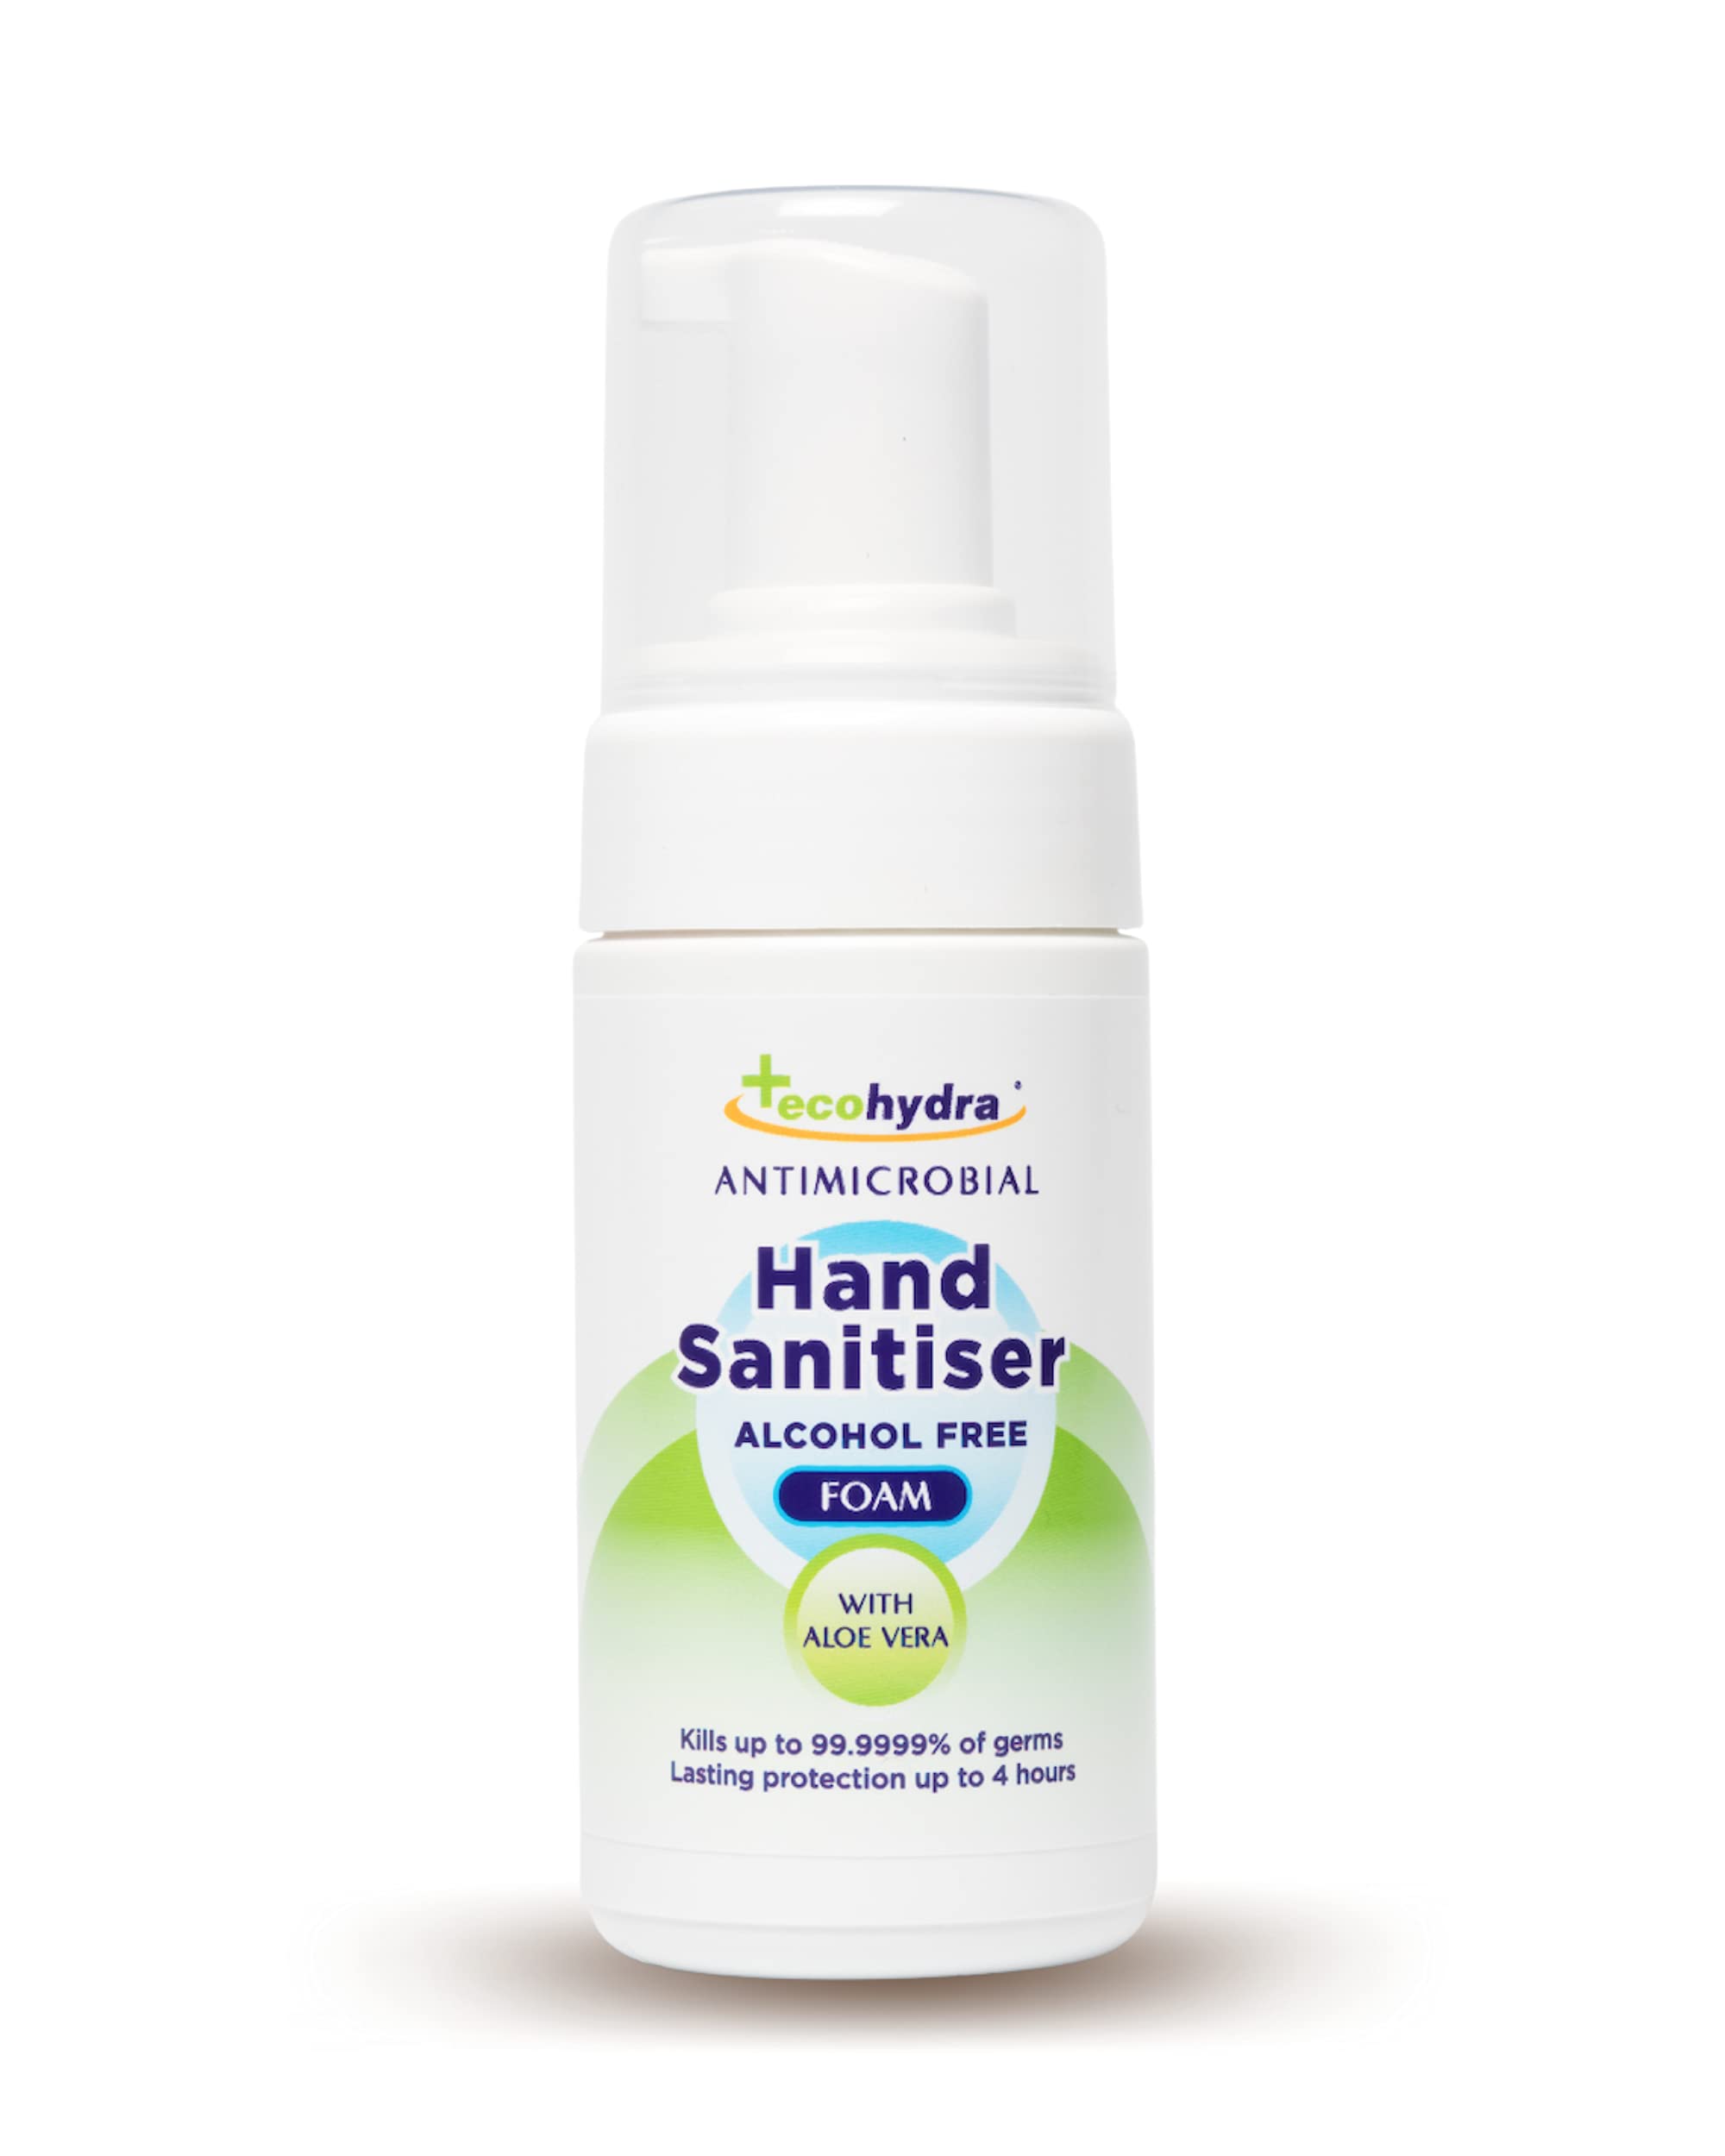 EcoHydra Alcohol Free Foam Hand Sanitiser - 100ml | NHS Approved, Hospital Grade Sanitiser | Kills Up To 99.9999% of Bacteria and Viruses | Kind On Skin, Safe For Children, Unscented